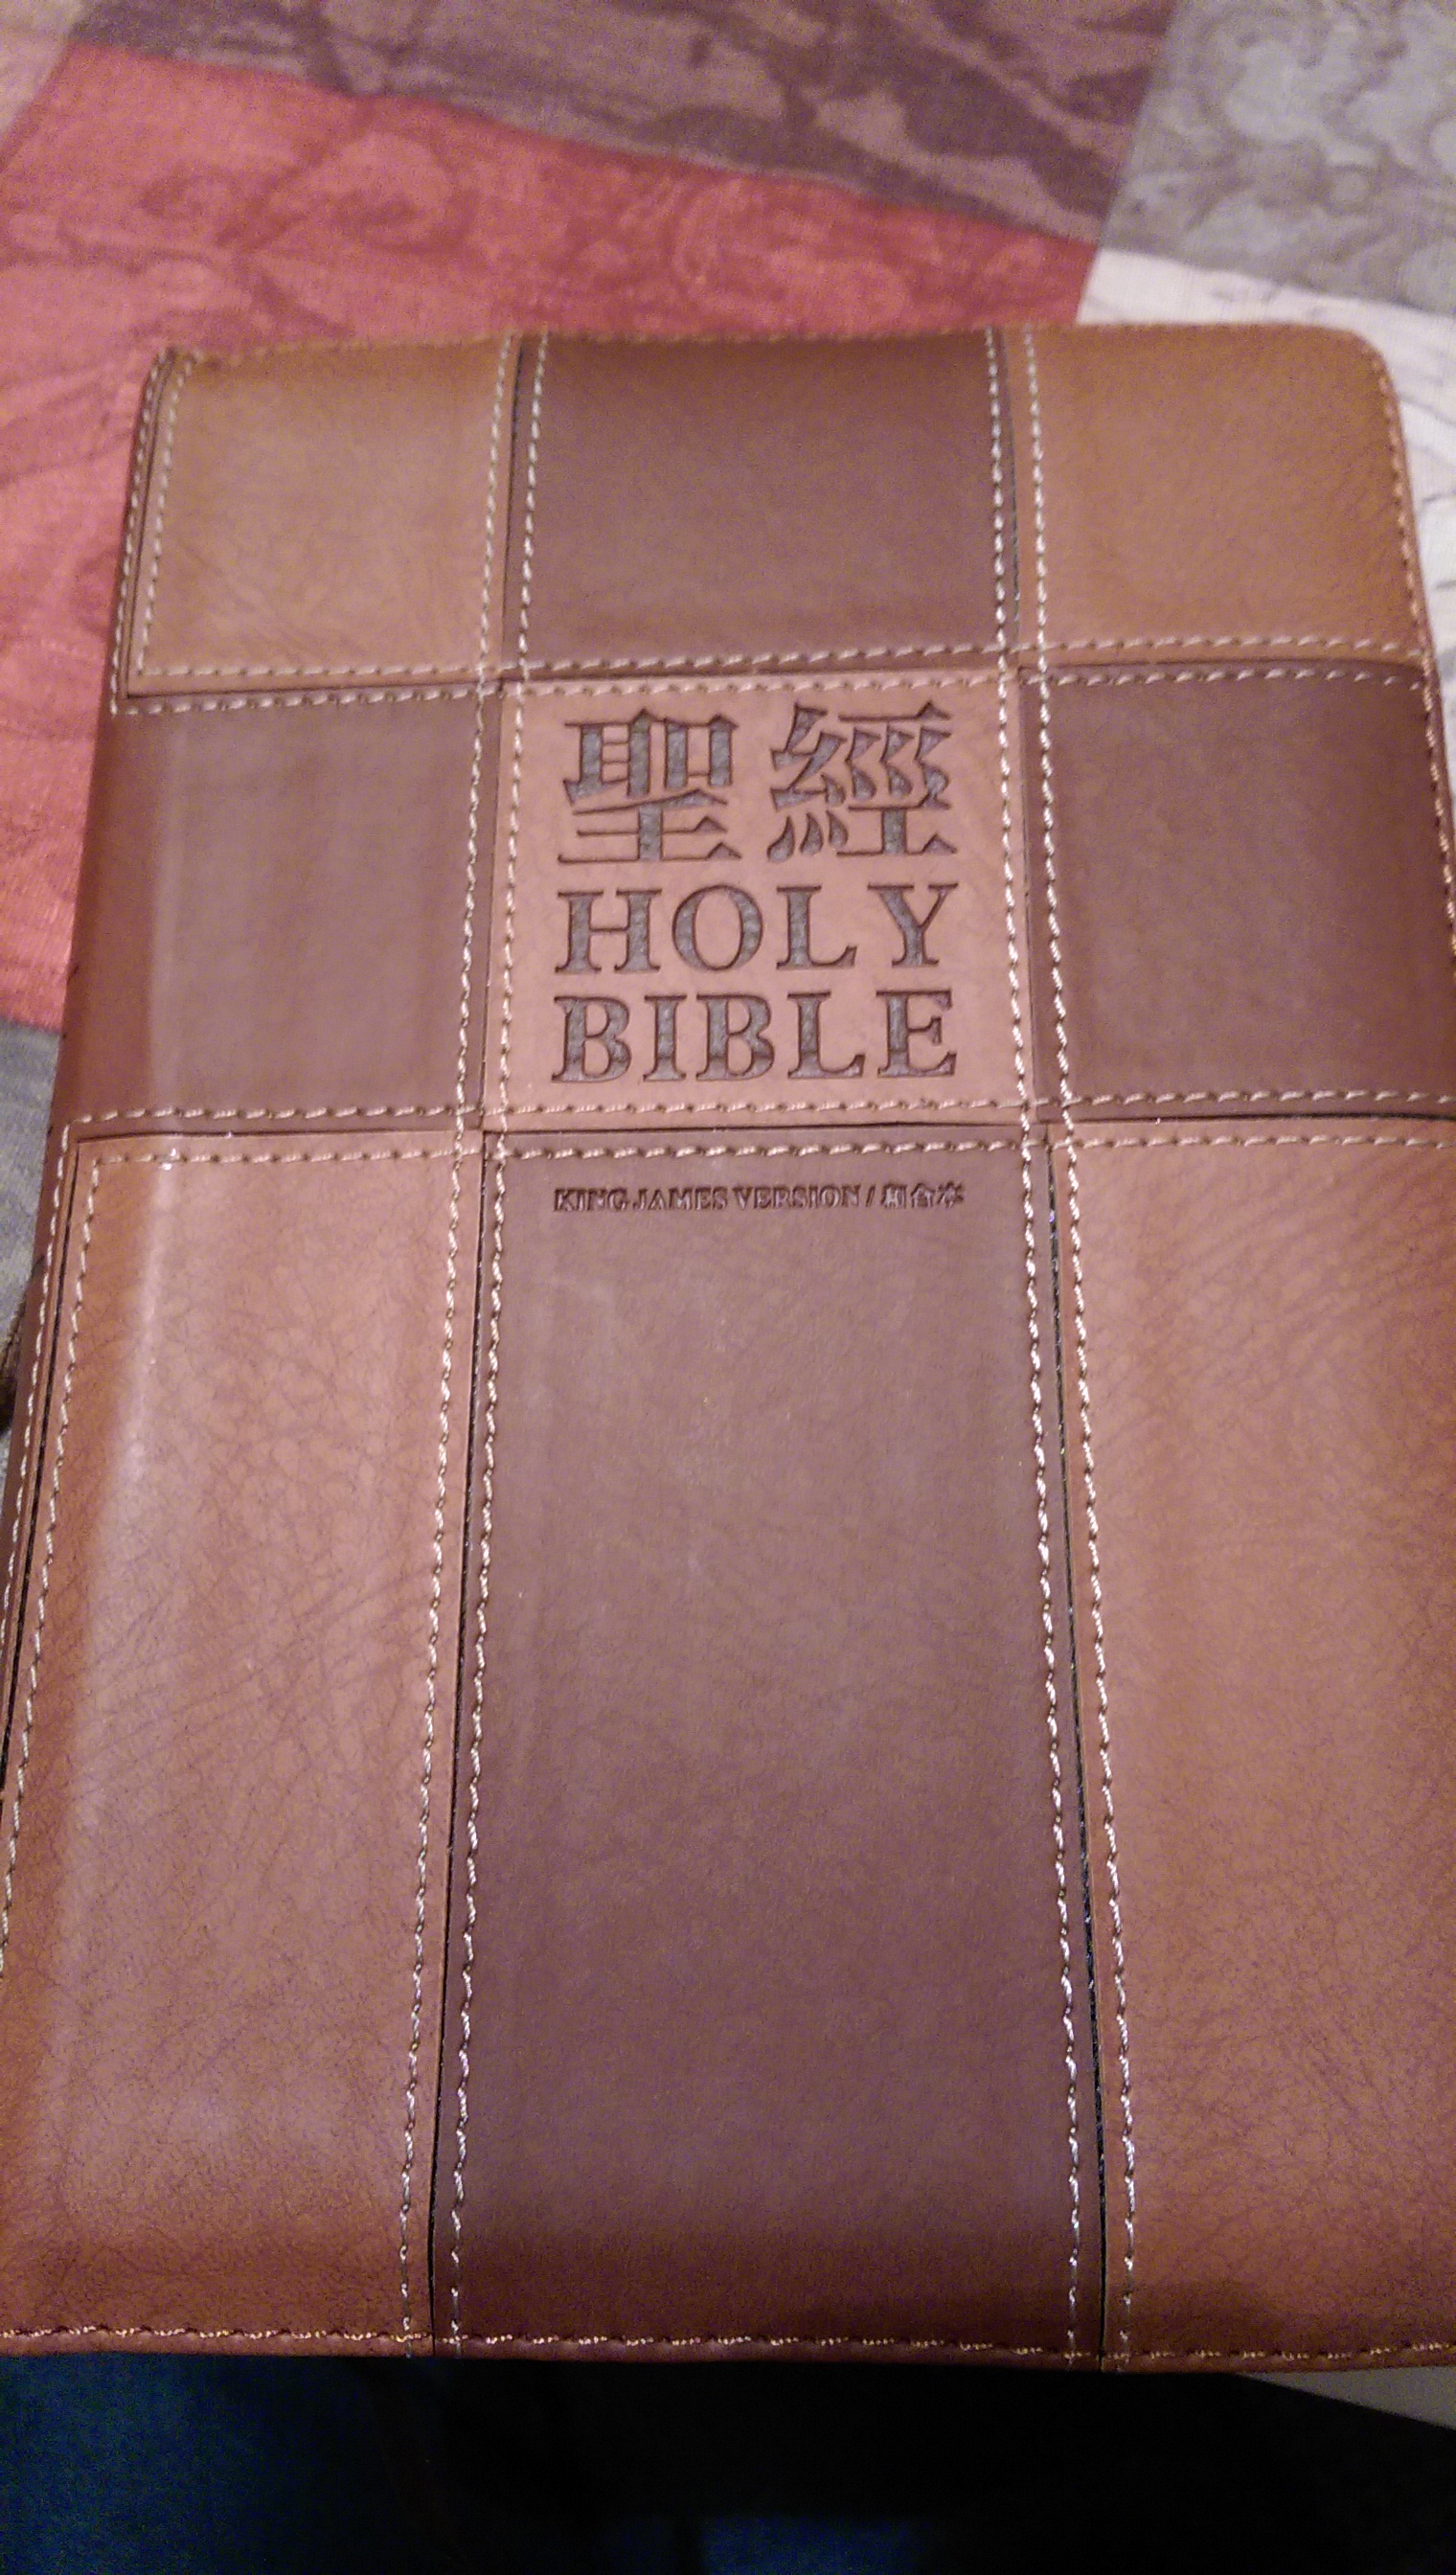 /zh-cn/posts/2014/09/2014-sept-diary/bible-1.jpg